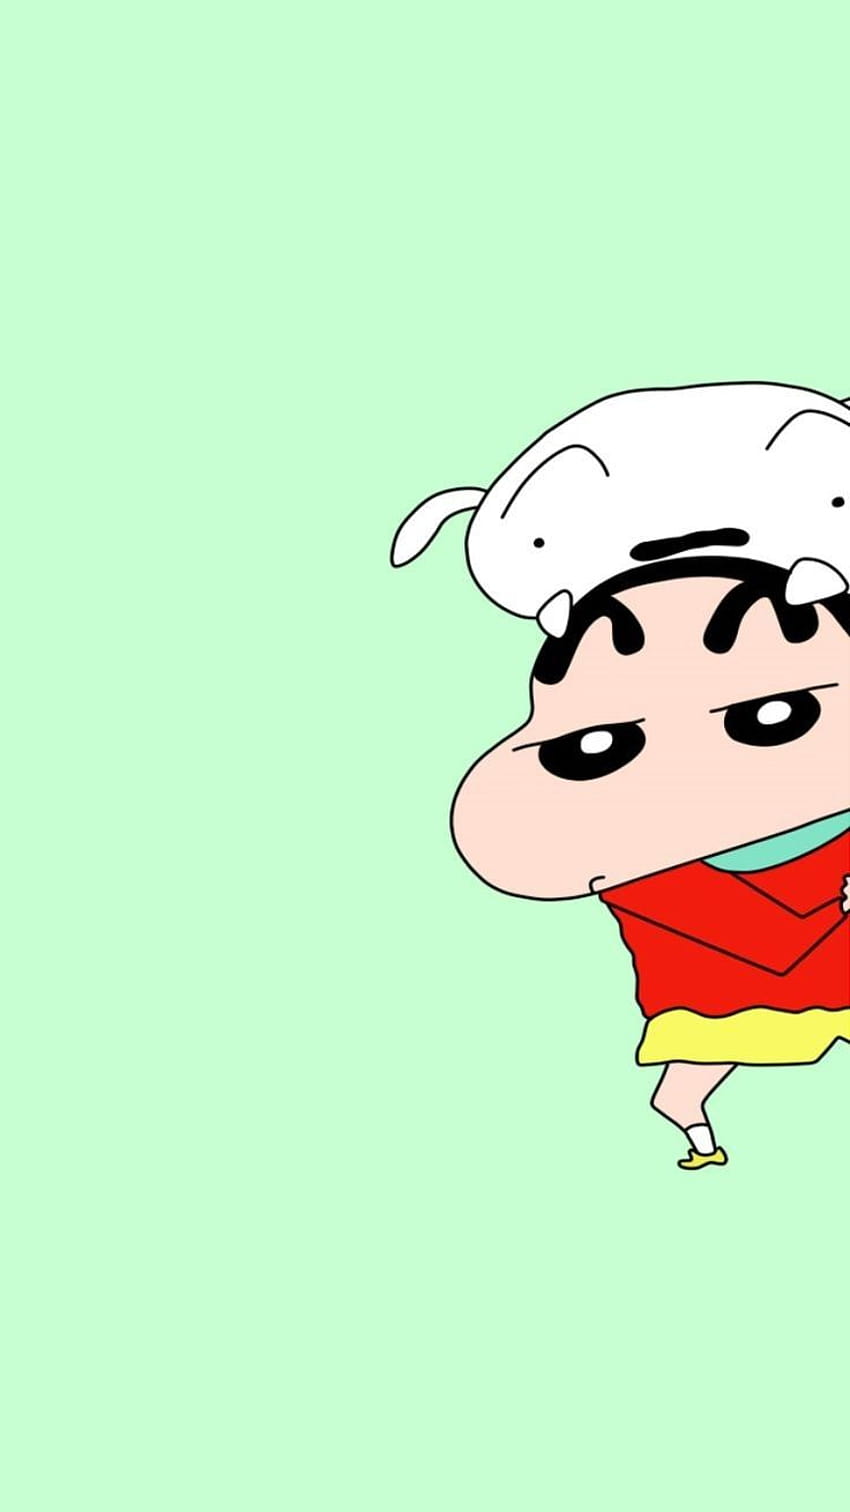 Shinchan ♥️  Cartoon wallpaper, Cartoon girl images, Crayon